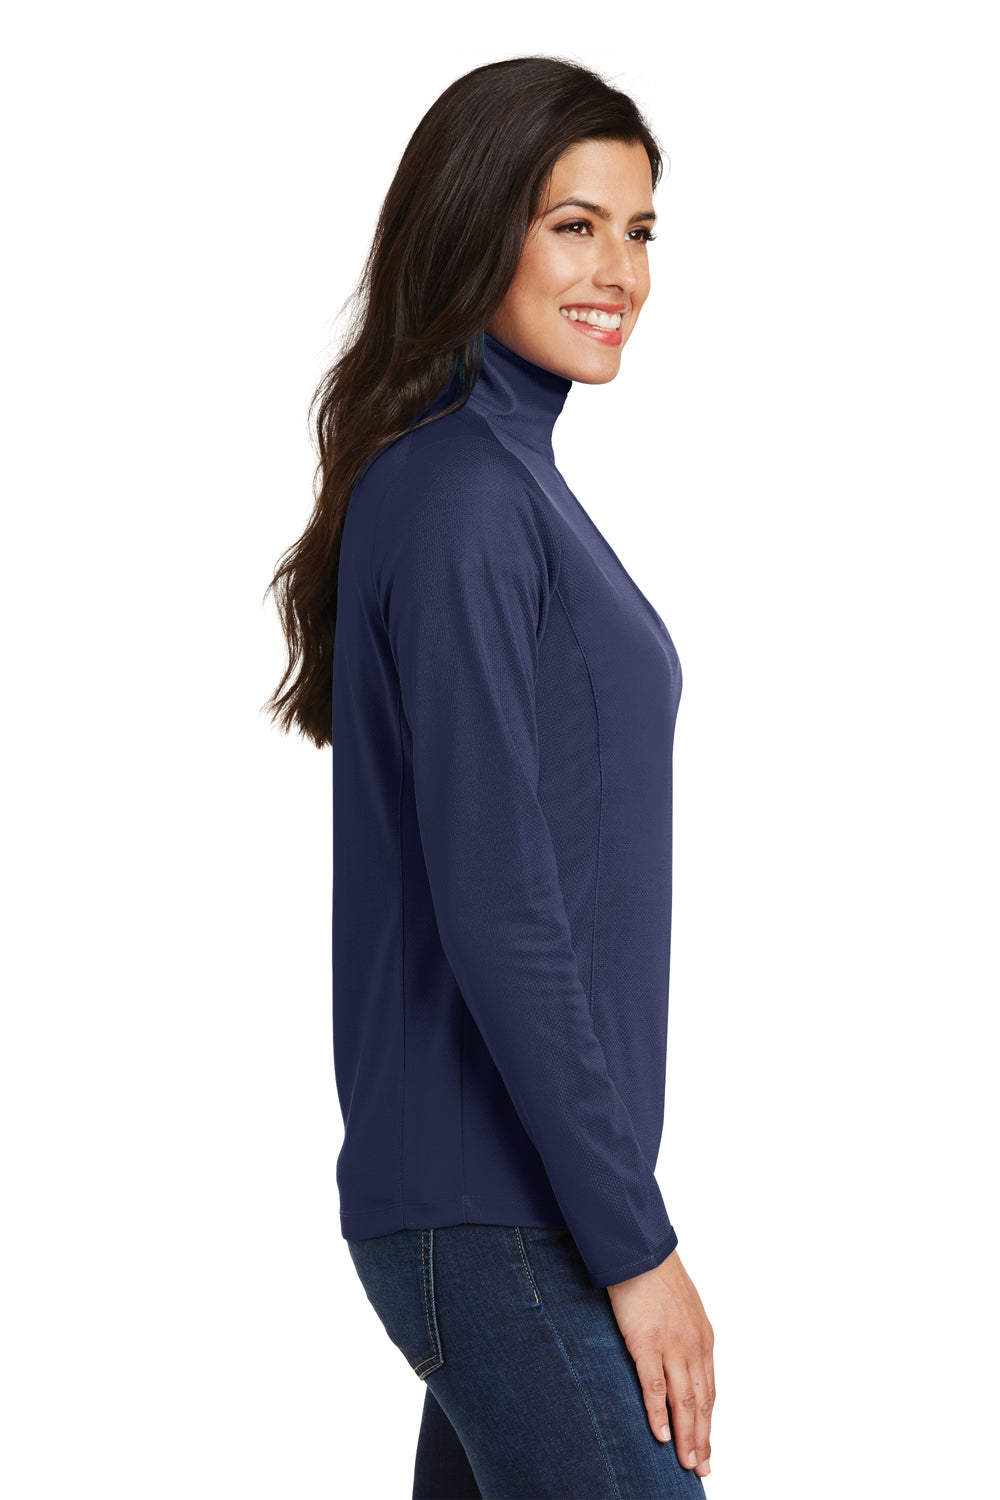 Port Authority L806 Womens Moisture Wicking 1/4 Zip Sweatshirt Navy Blue Side